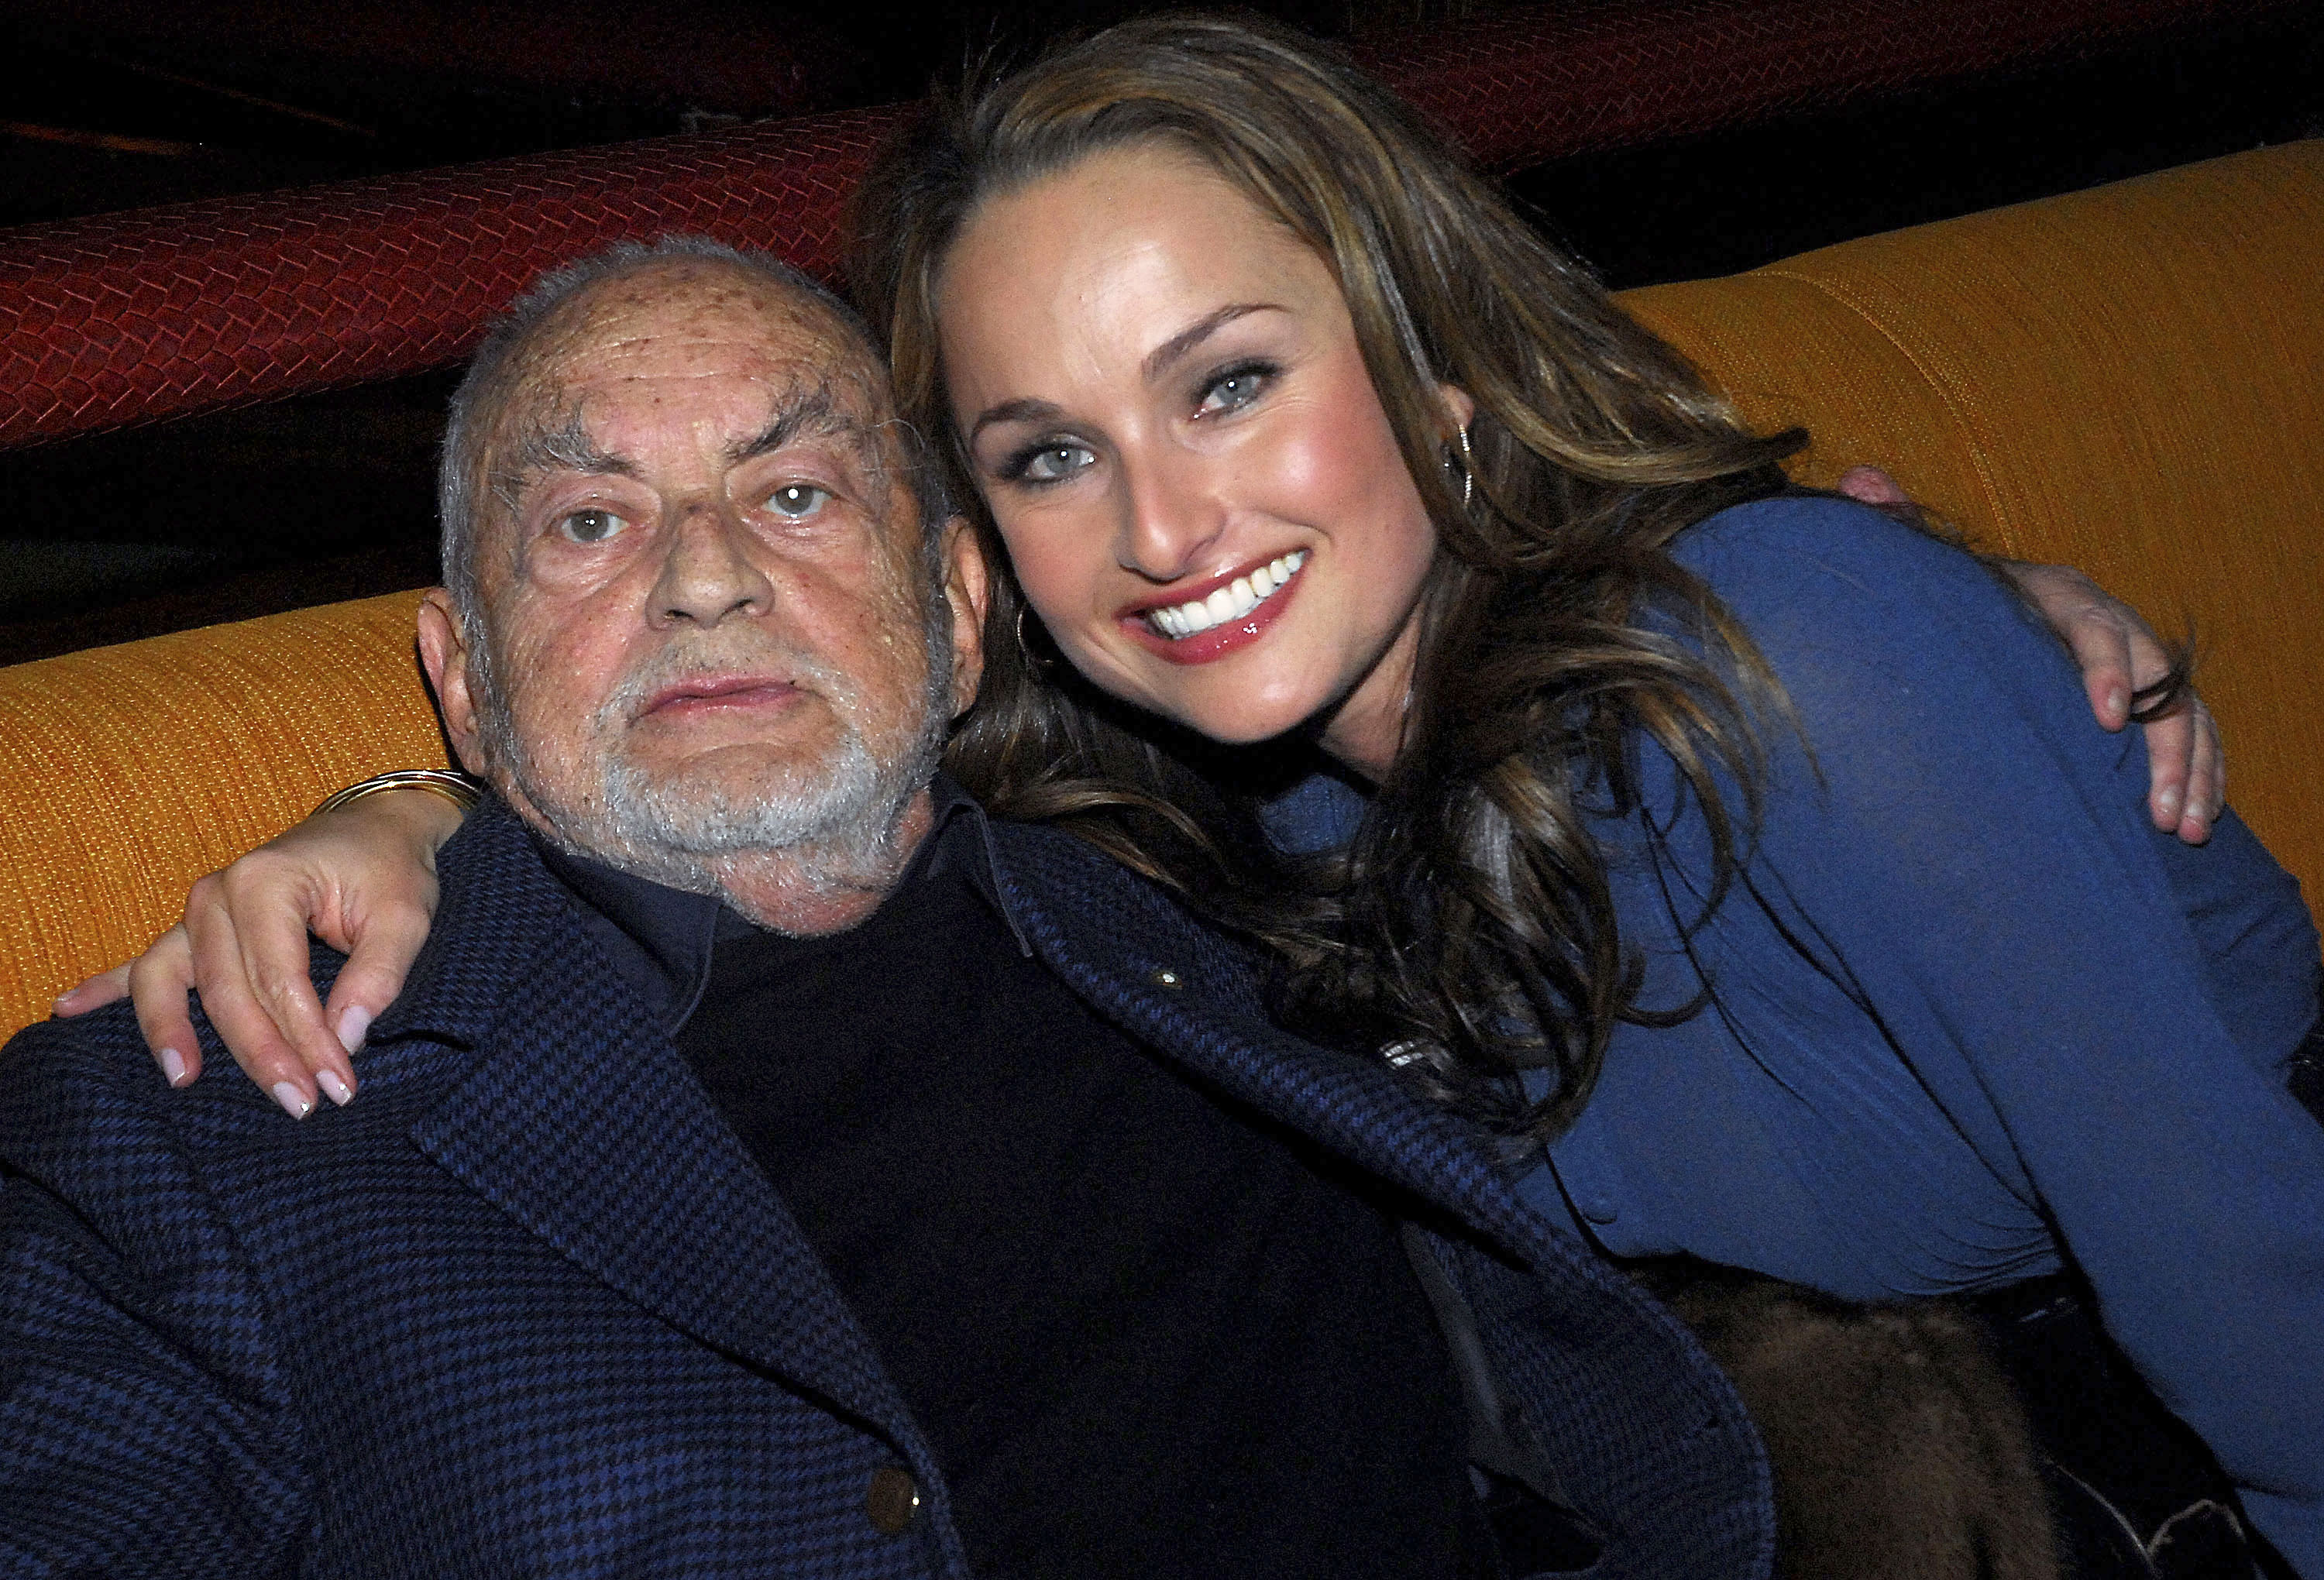 Left to right: Film producer Dino De Laurentiis in 2007 with his granddaughter, Food Network star Giada De Laurentiis.